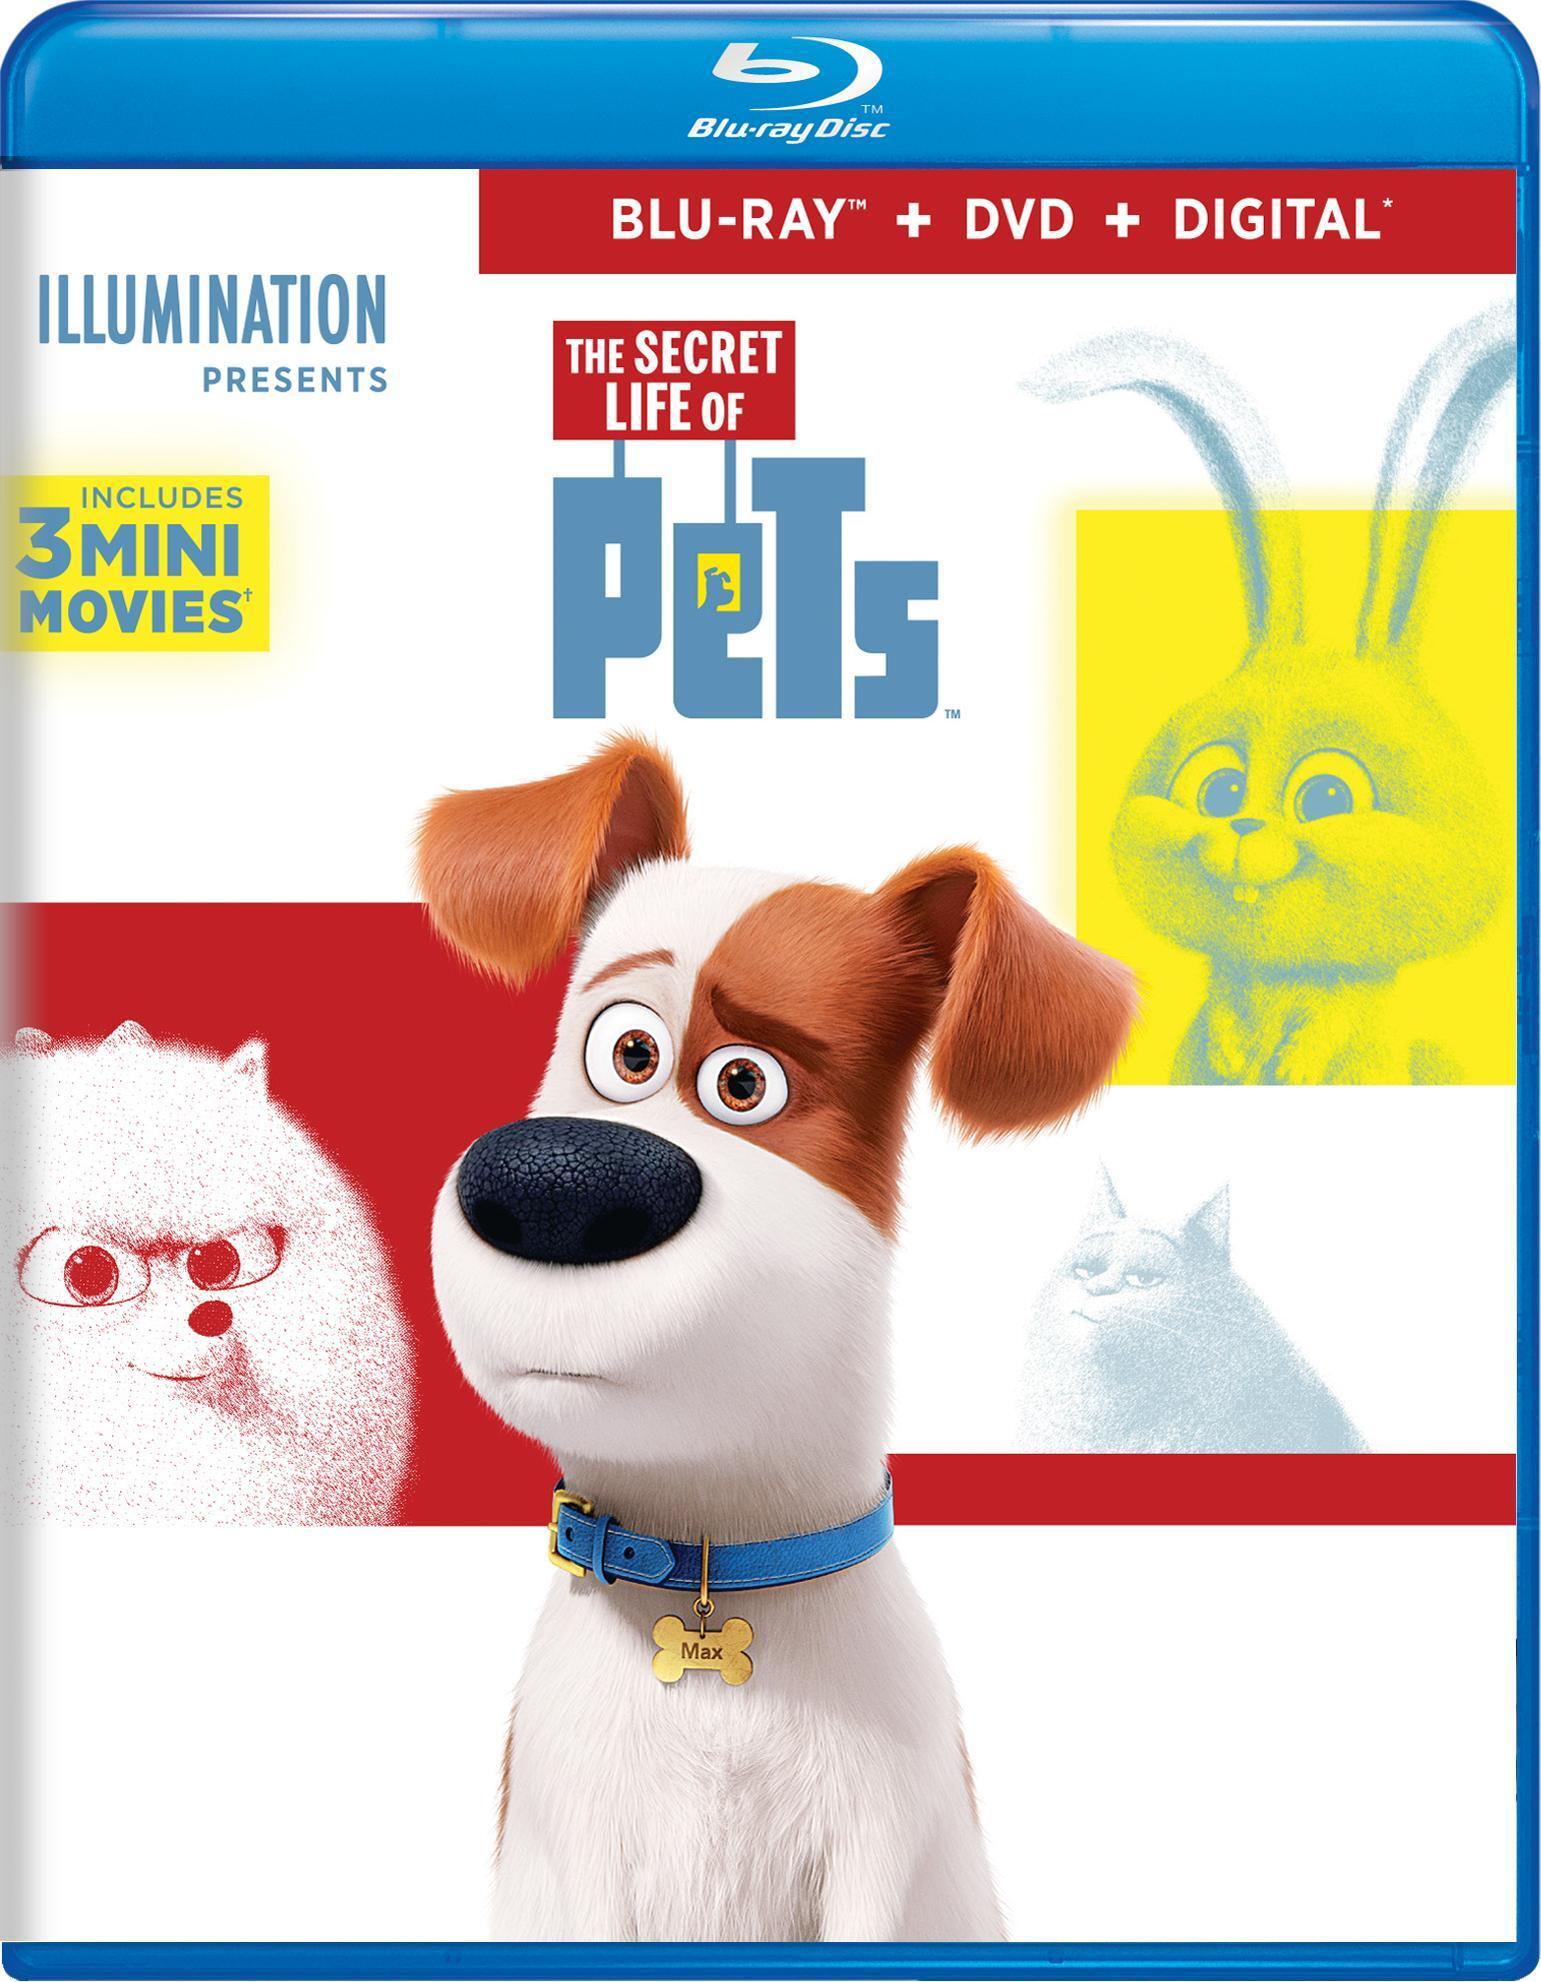 The Secret Life Of Pets (DVD + Digital) - Blu-ray [ 2016 ]  - Children Movies On Blu-ray - Movies On GRUV